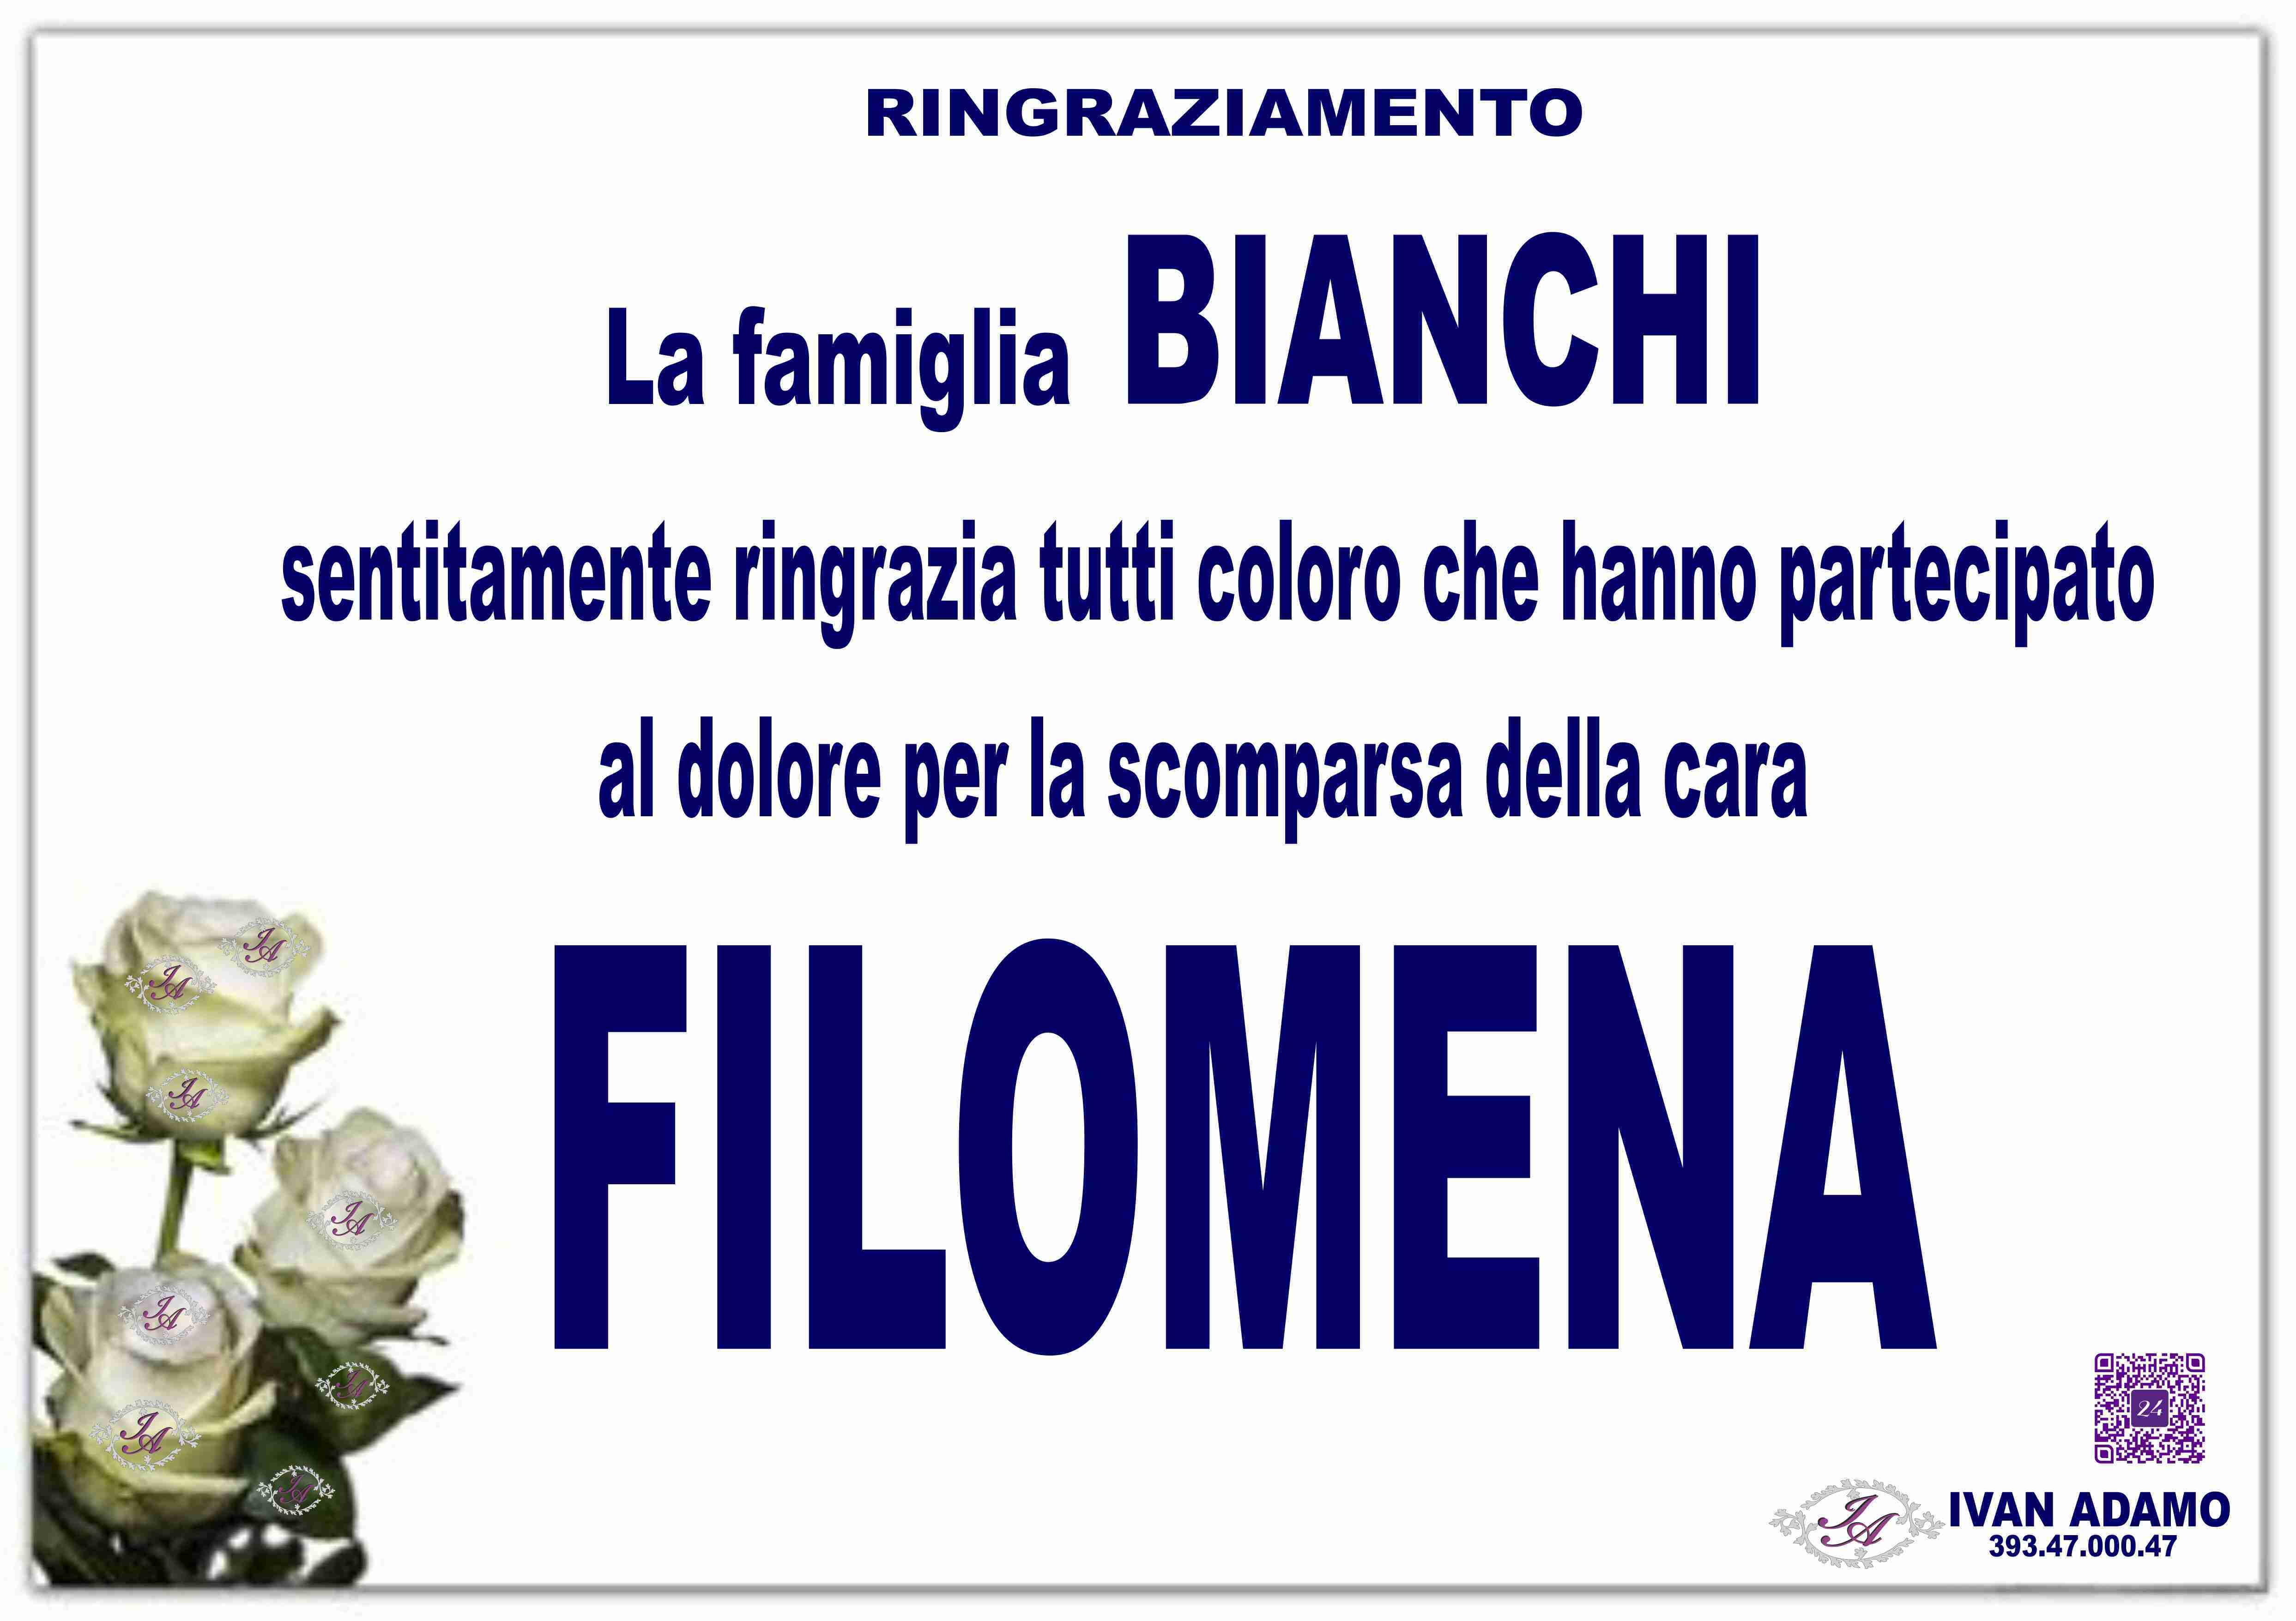 Filomena Bianchi